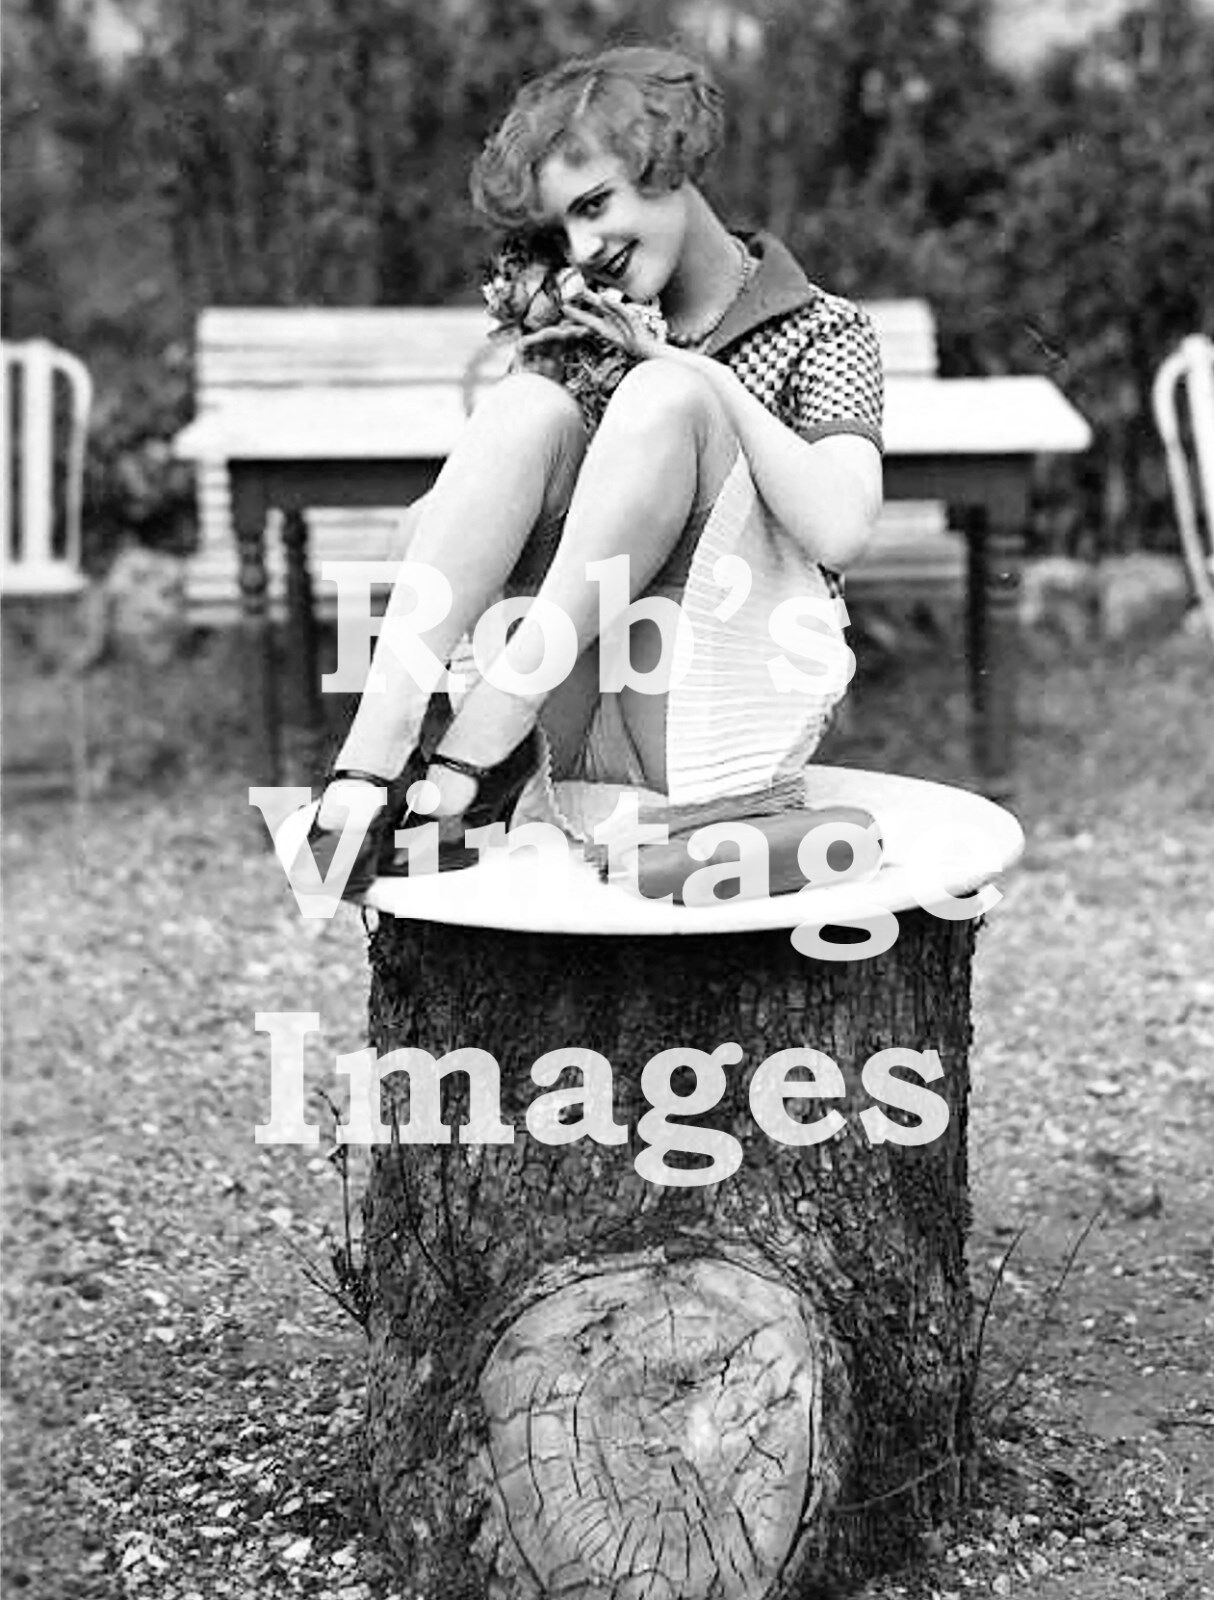 Naughty Sassy Flapper Teasing girl Photo 11 1920s Jazz Prohibition era 